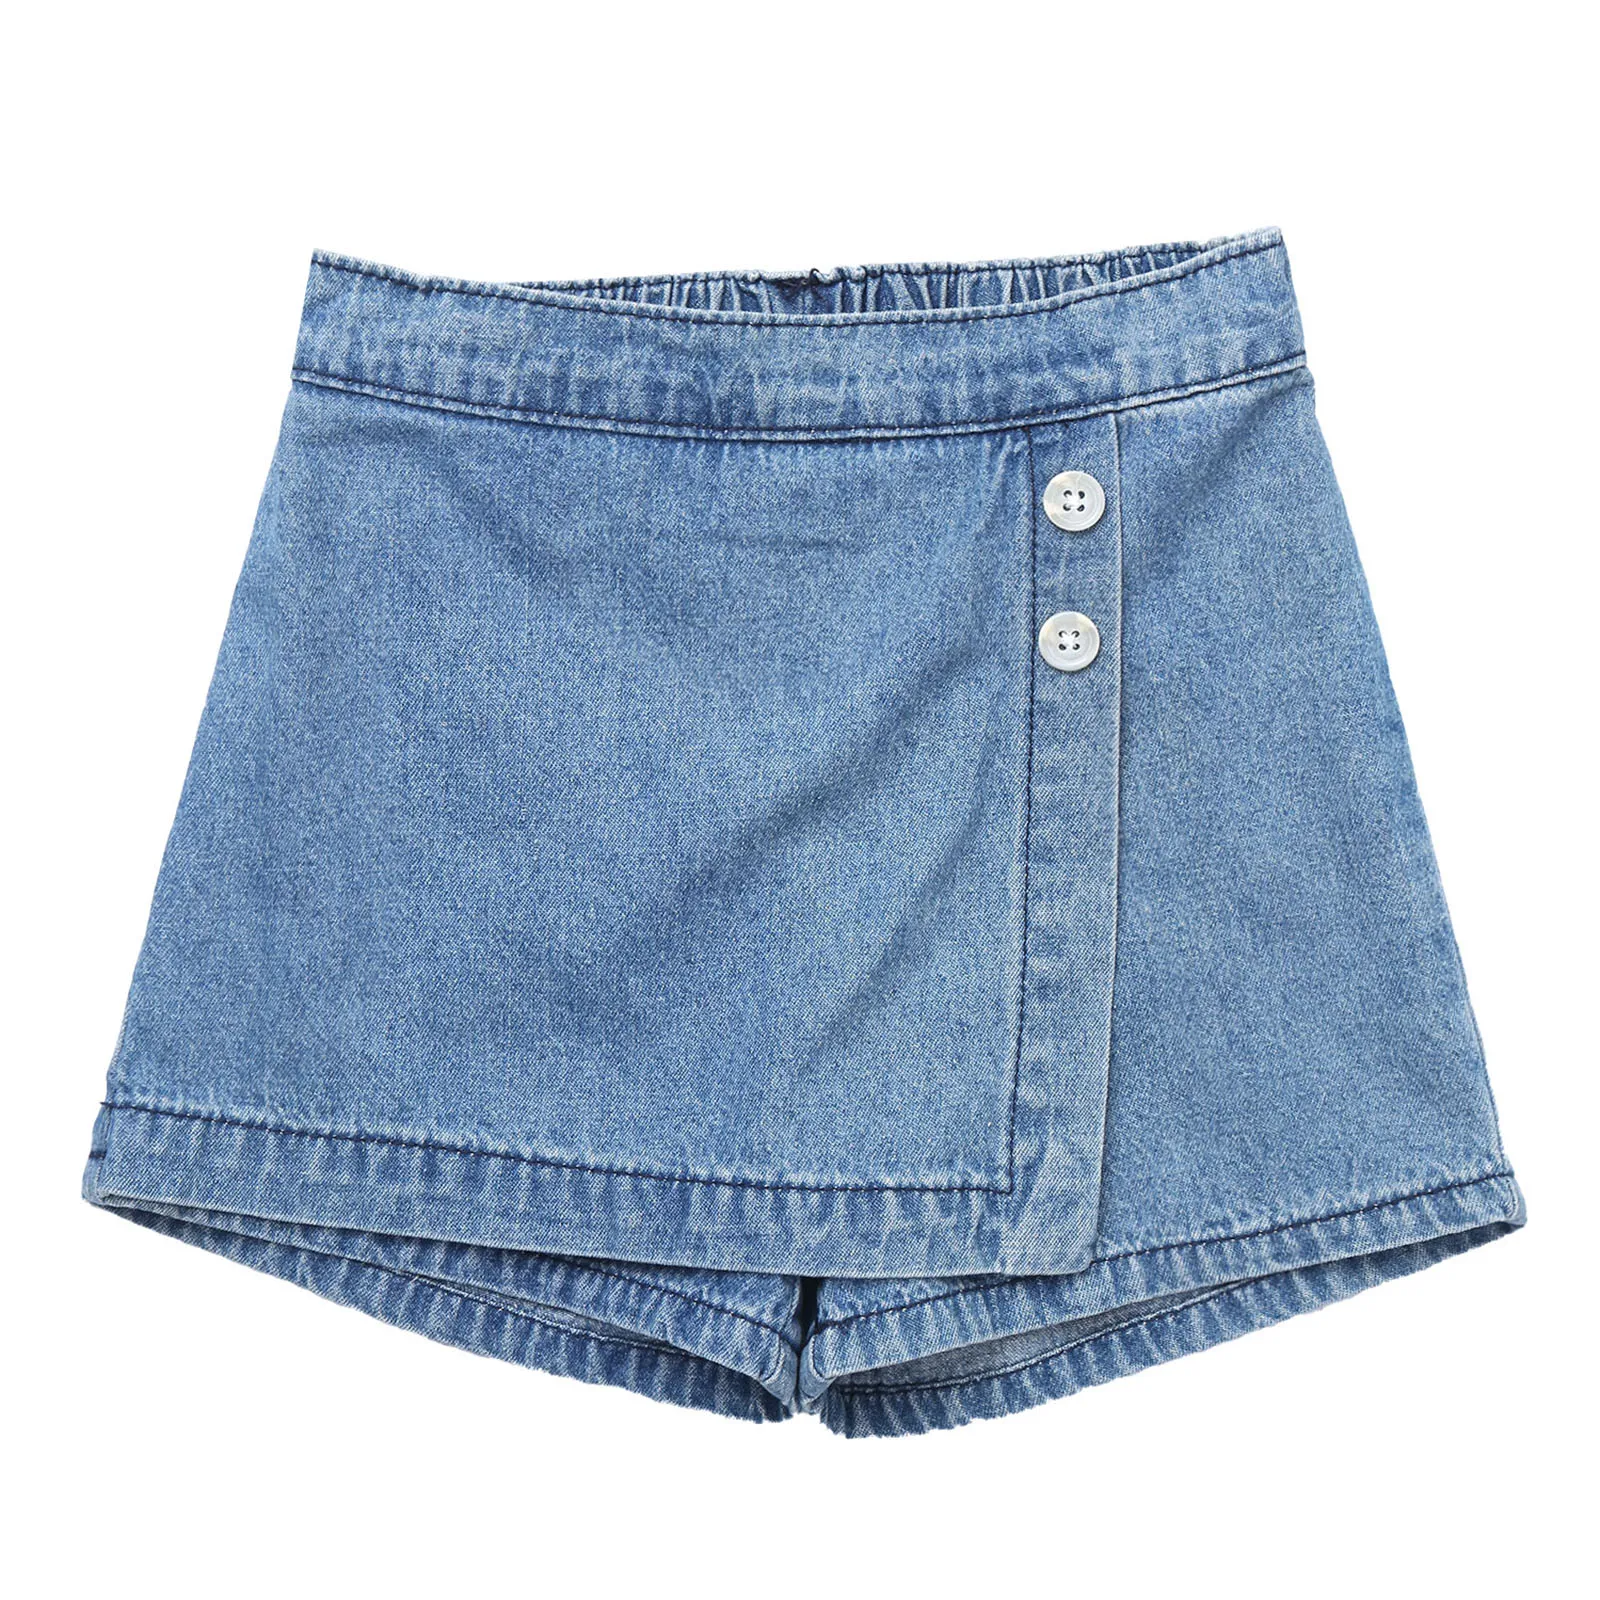 Oyolan Kid Girls Denim Button Front Solid Color Irregular Hem A-line Skirt Mini Skort Pantskirt Casual Shorts 